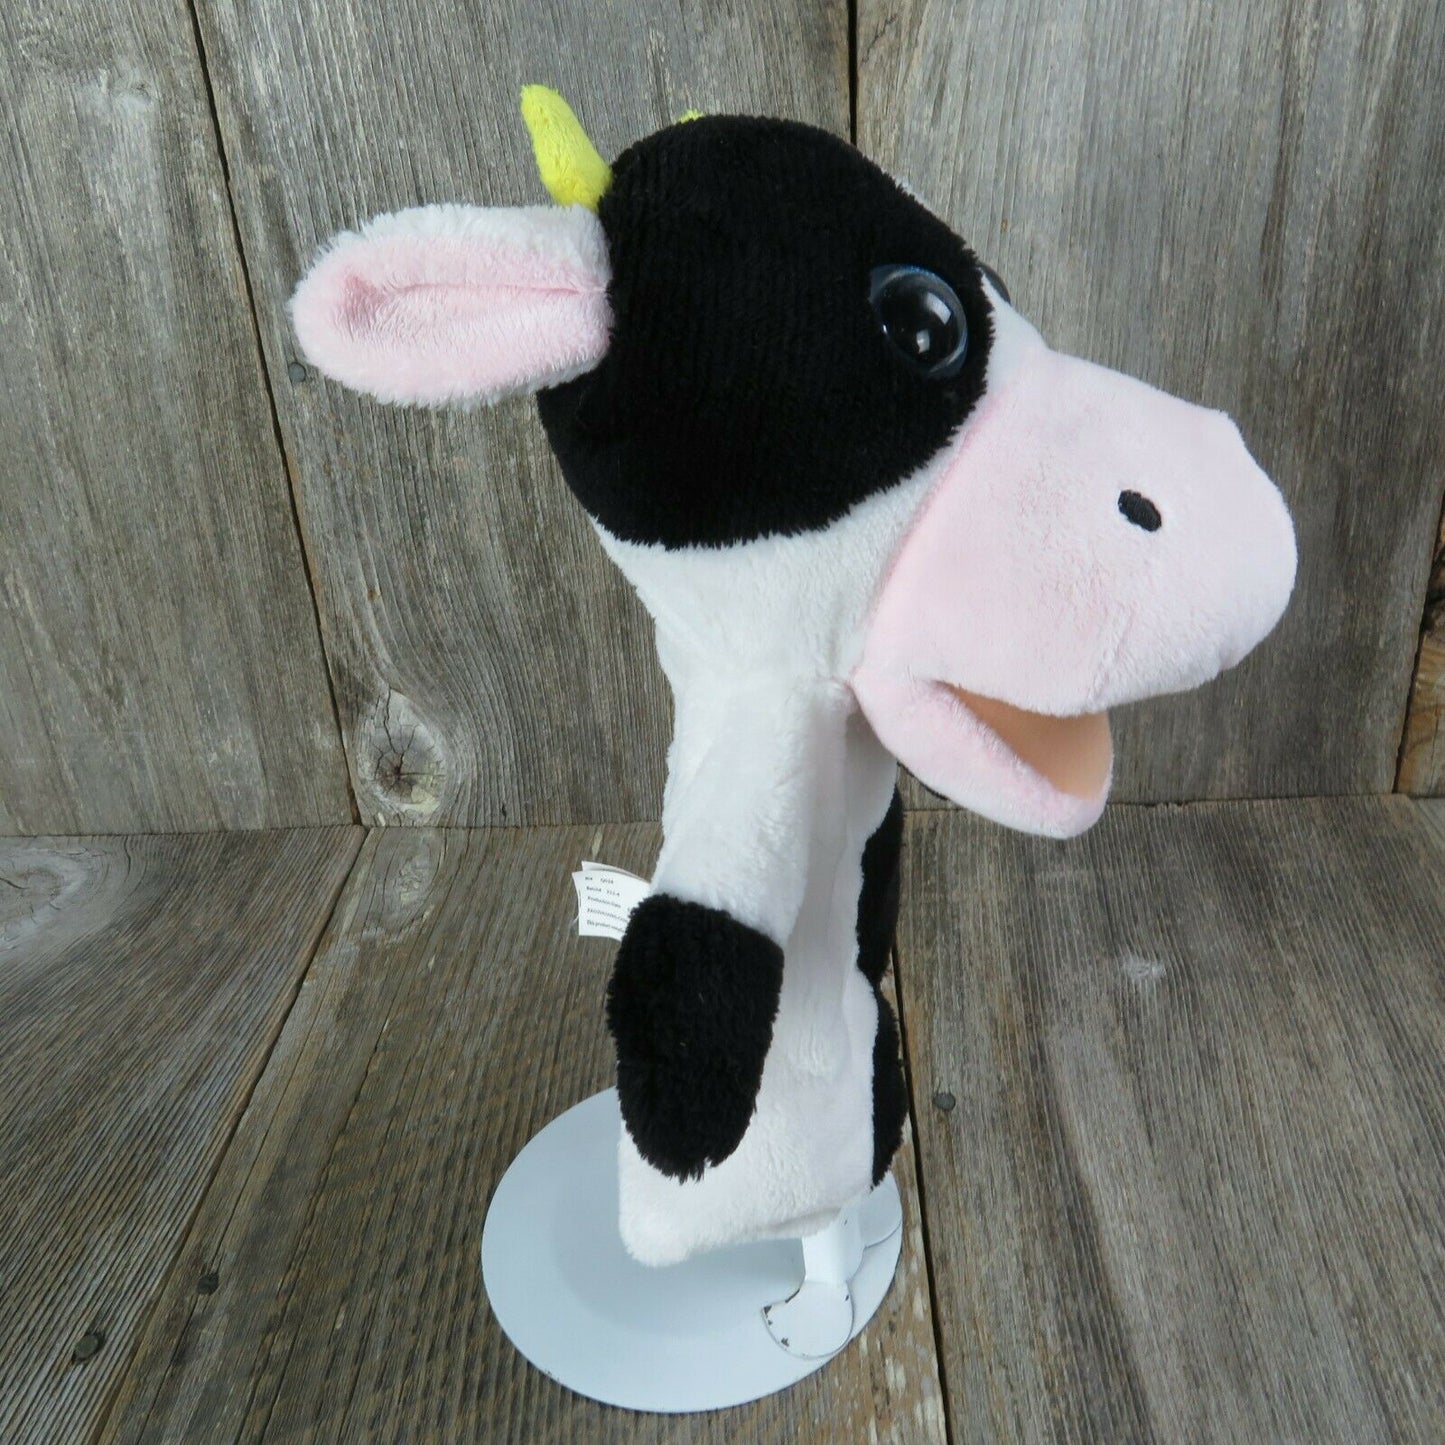 Cow Hand Puppet Black and White Plush KellyToy Stuffed Animal